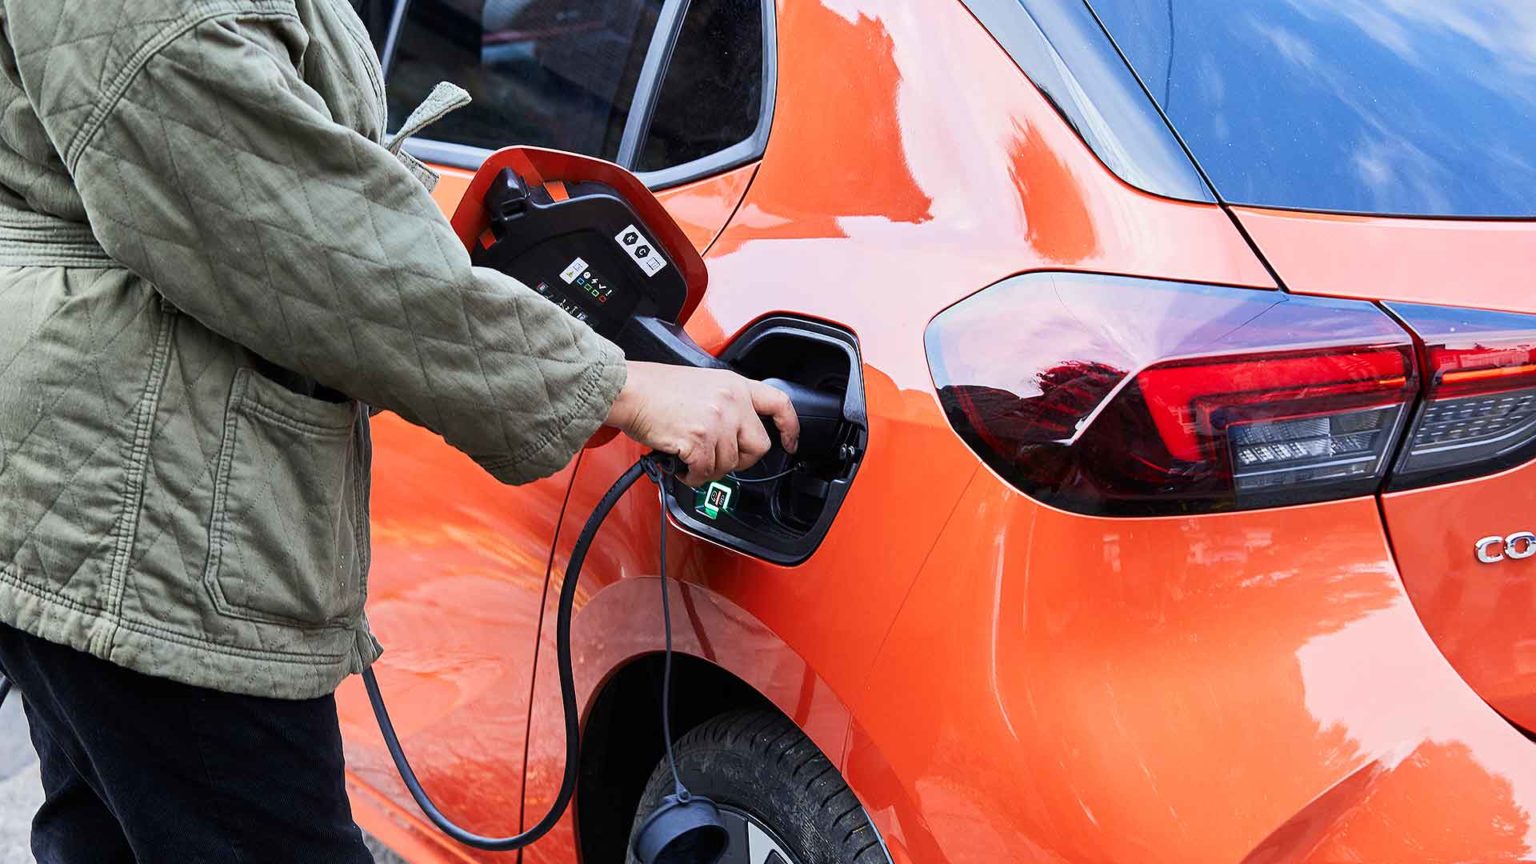 plug-in-car-grant-for-electric-cars-cut-again-motoring-research